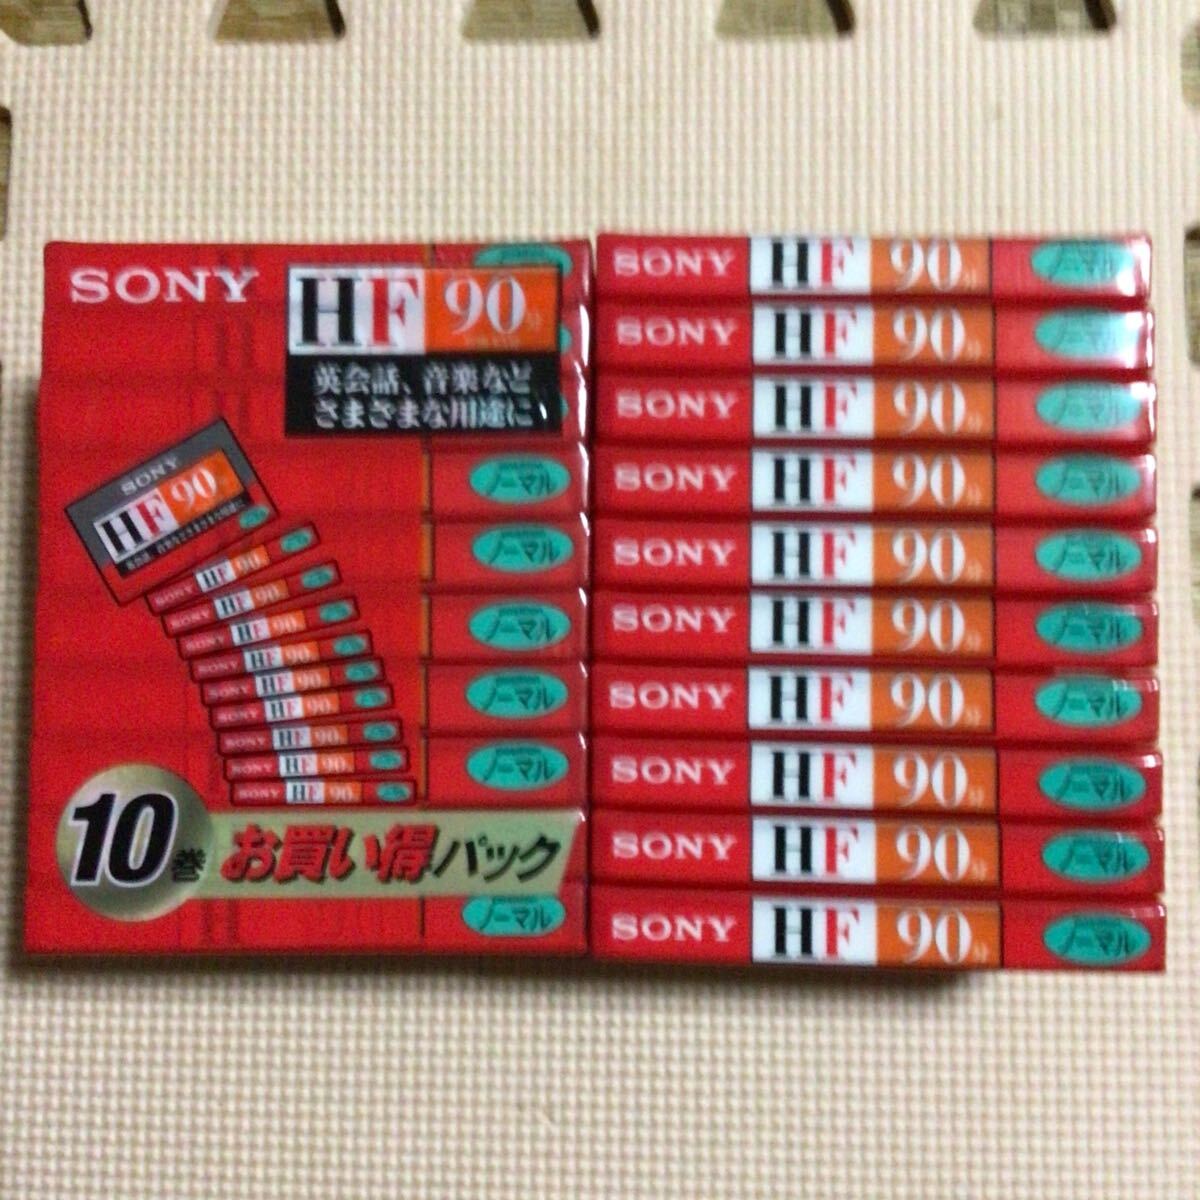 SONY HF 90 normal position cassette tape 20 pcs set [ unopened new goods ]**